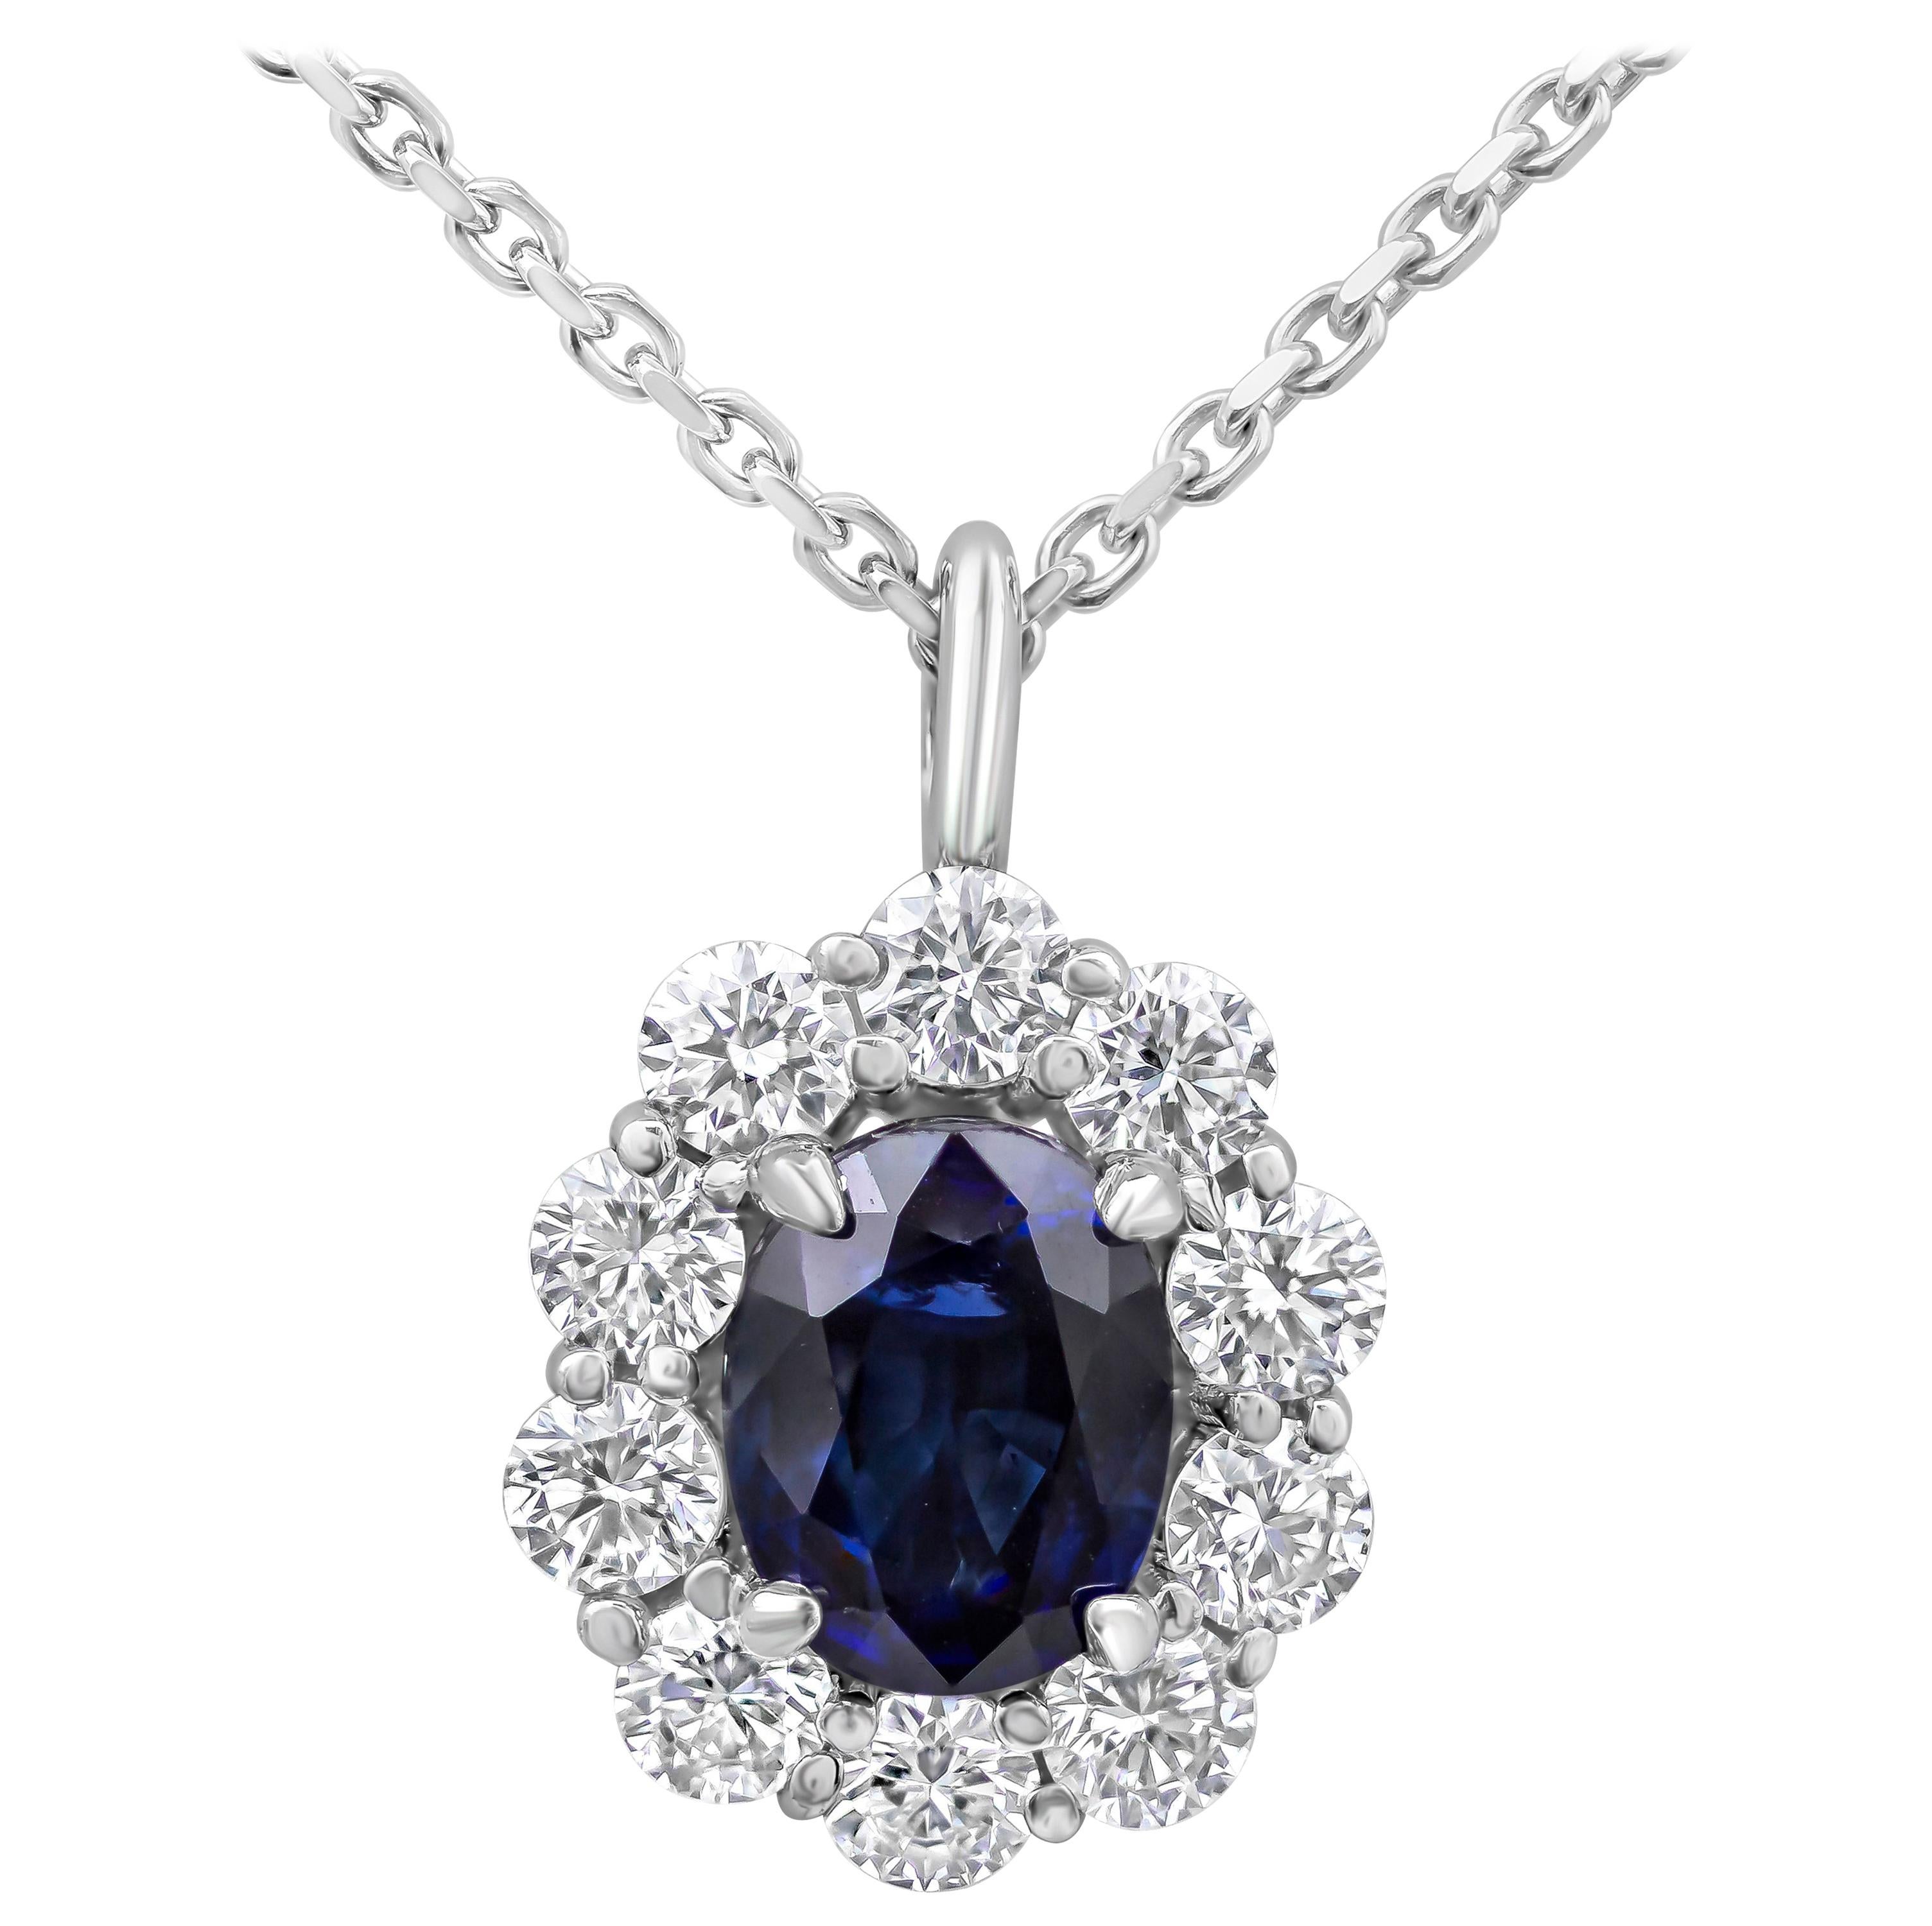 Roman Malakov, collier pendentif saphir bleu ovale 1,82 carat avec halo de diamants